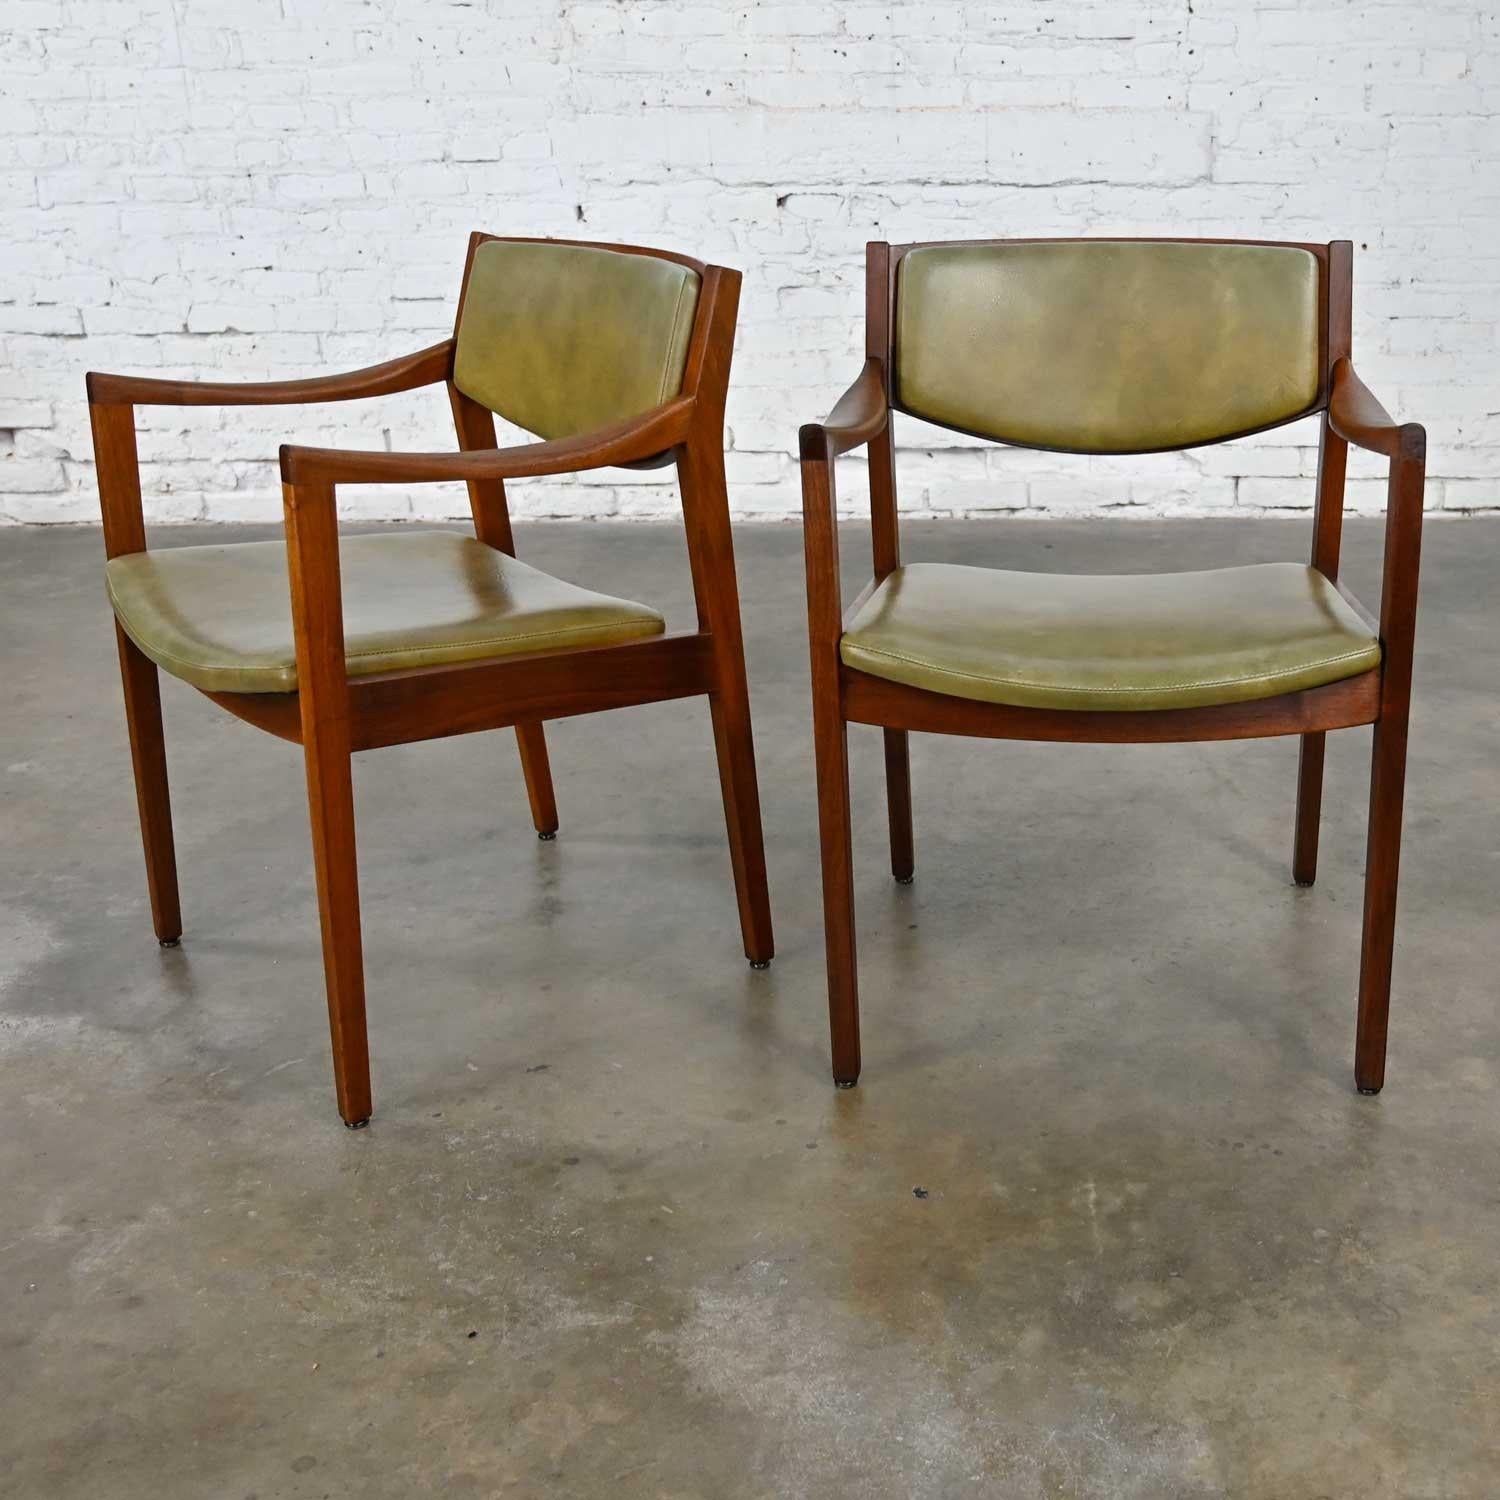 2 Mid-Century Modern Solid Walnut & Olive Green Faux Leather Chairs by Gunlocke 2